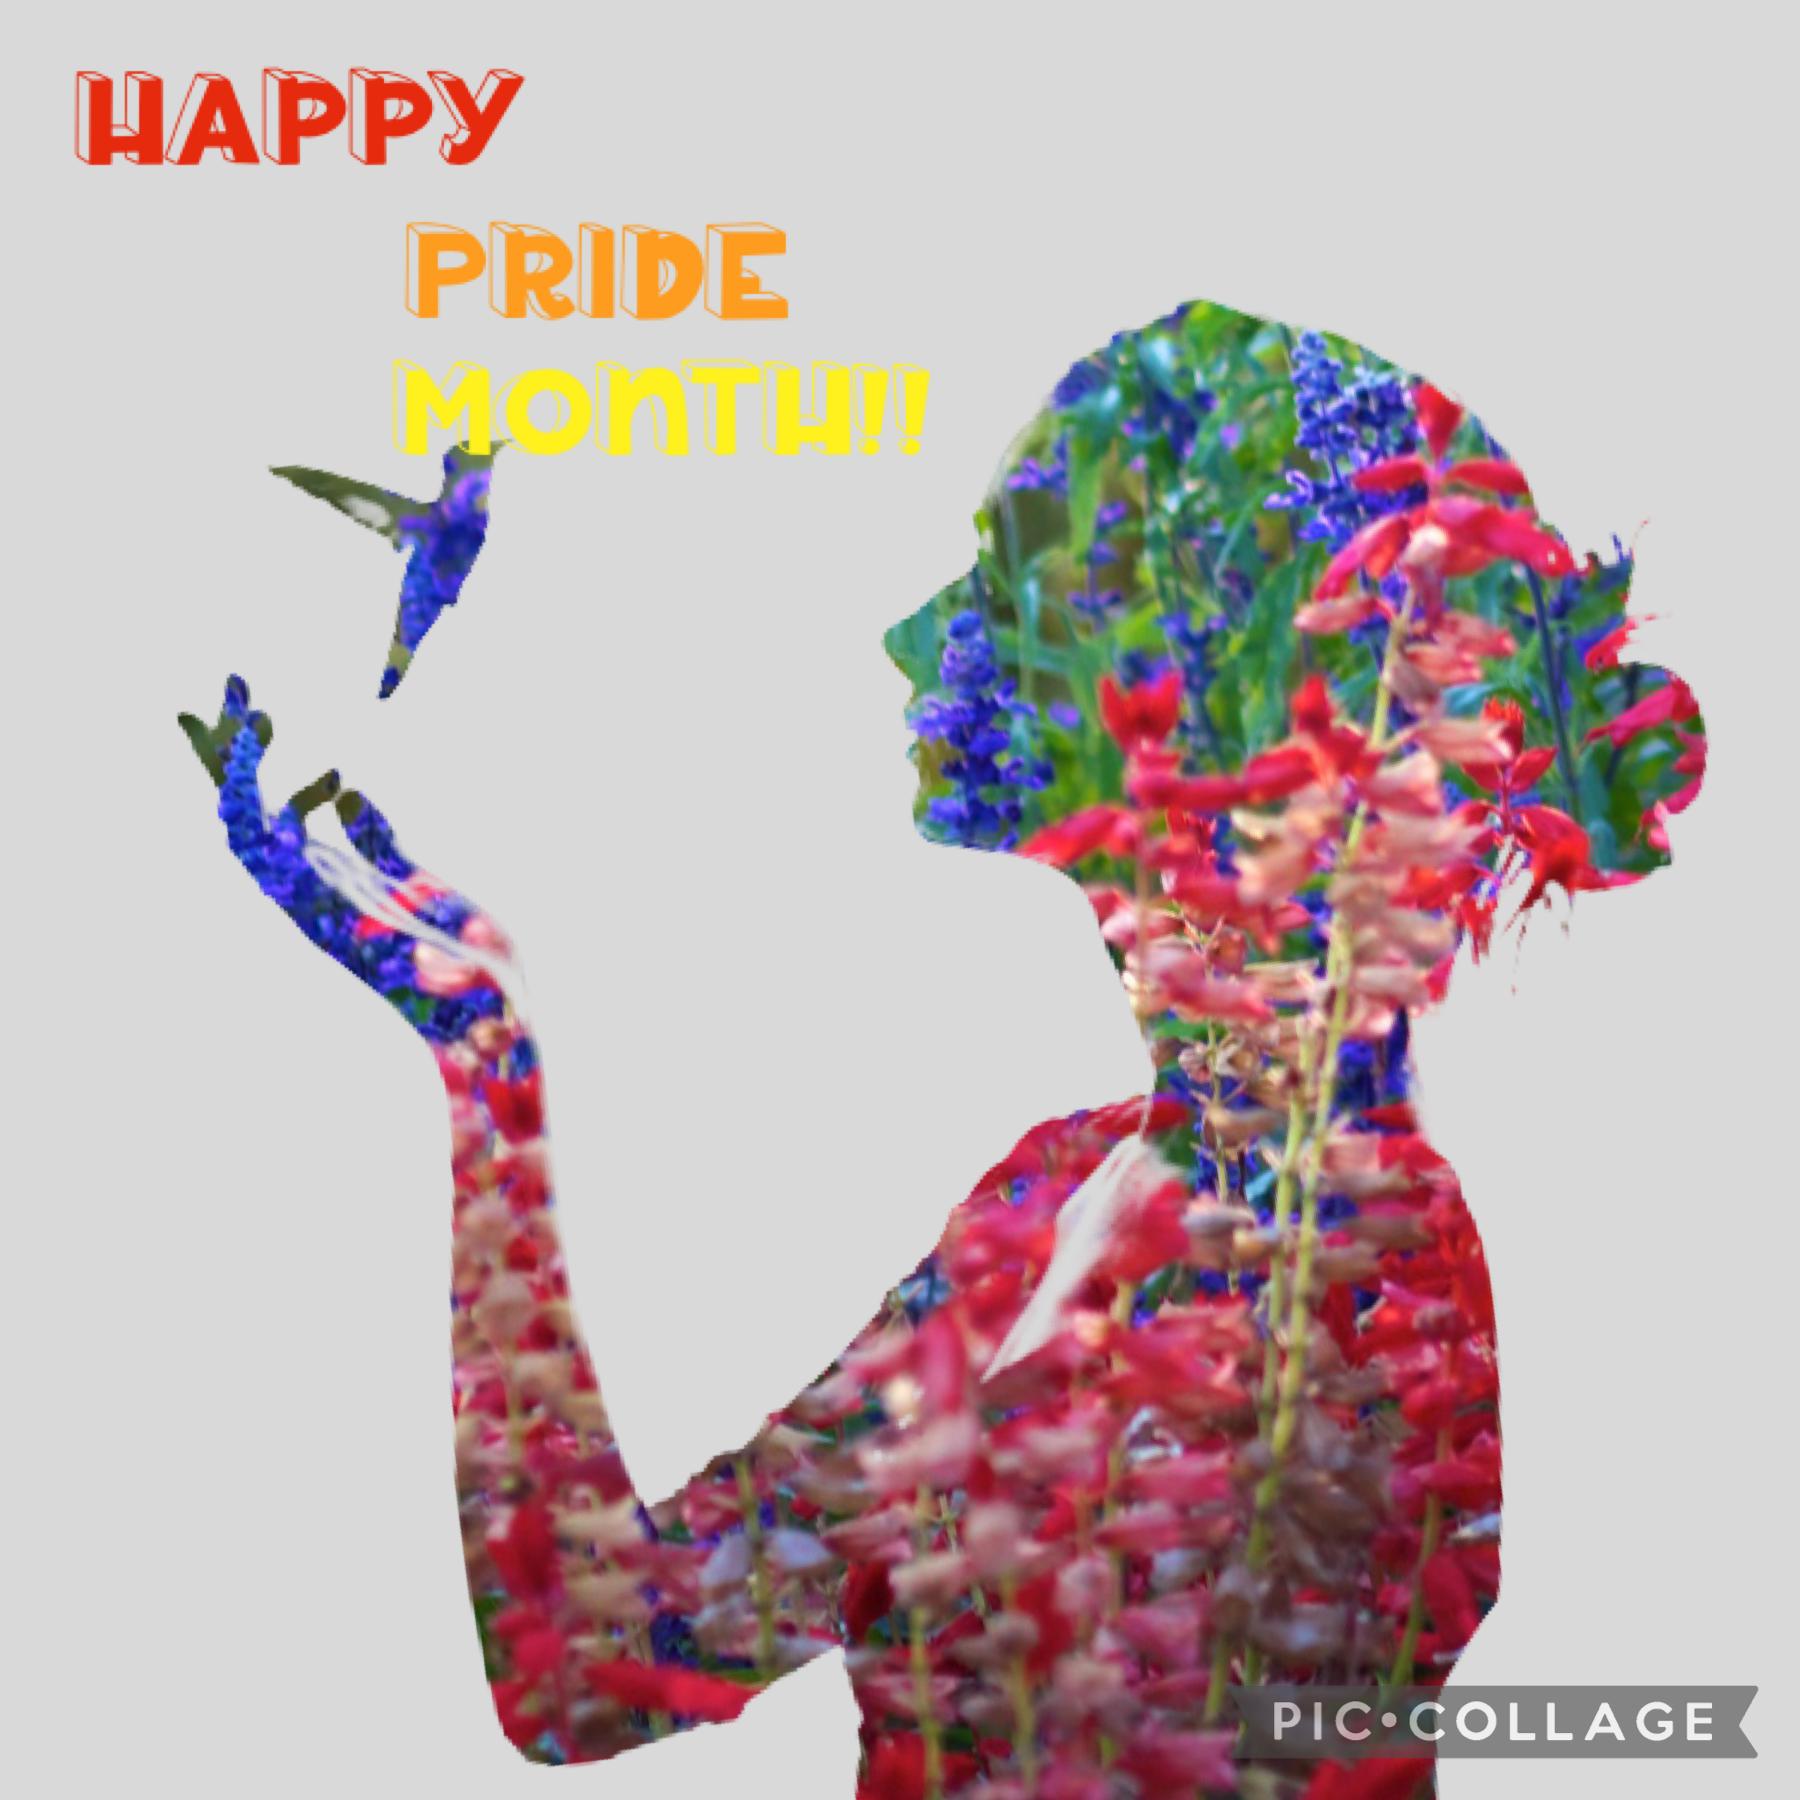 Happy pride month!! ❤️🧡💛💚💙💜💓